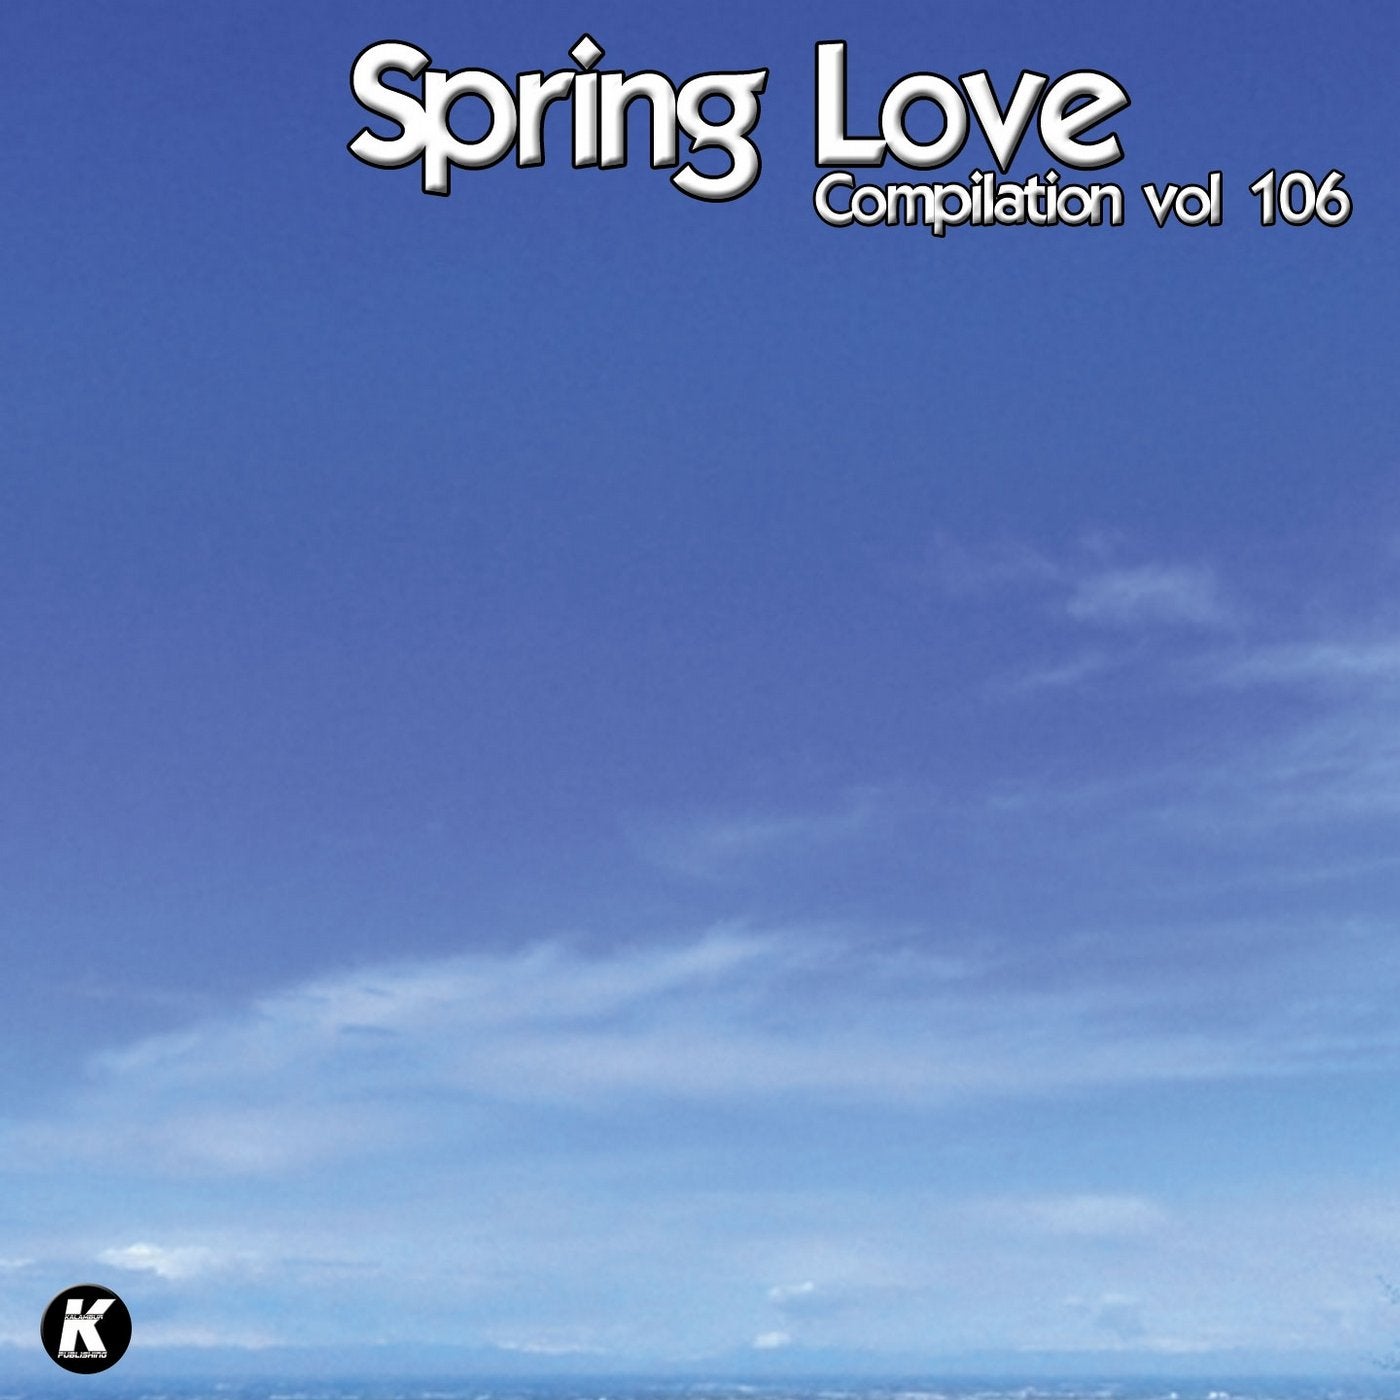 SPRING LOVE COMPILATION VOL 106